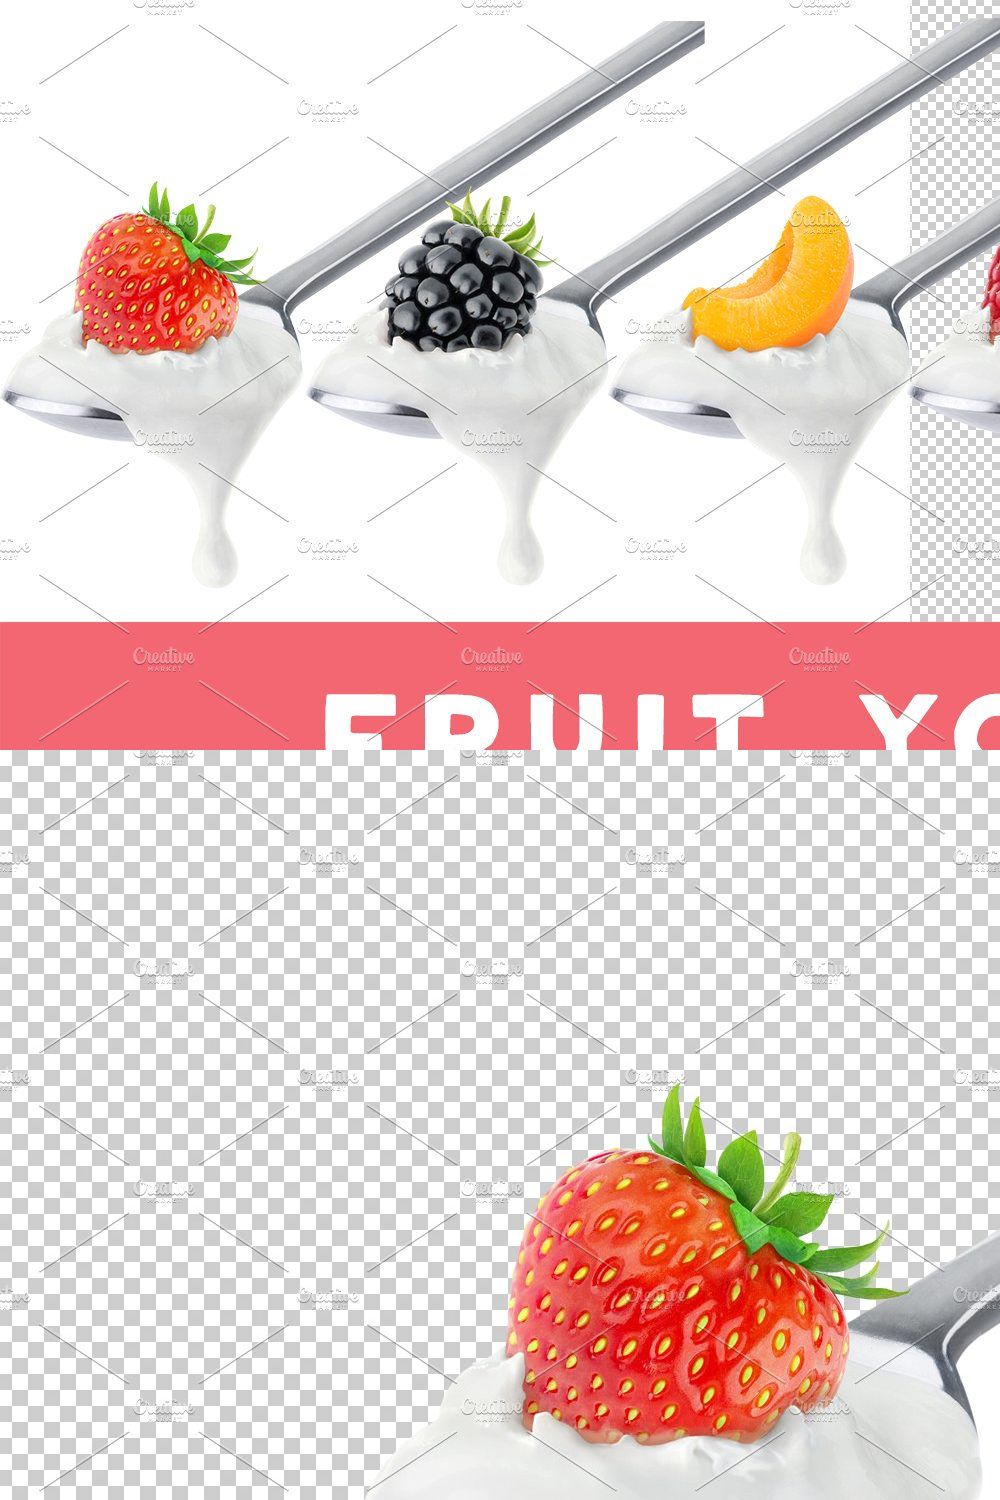 Fruit yogurt on spoons pinterest preview image.